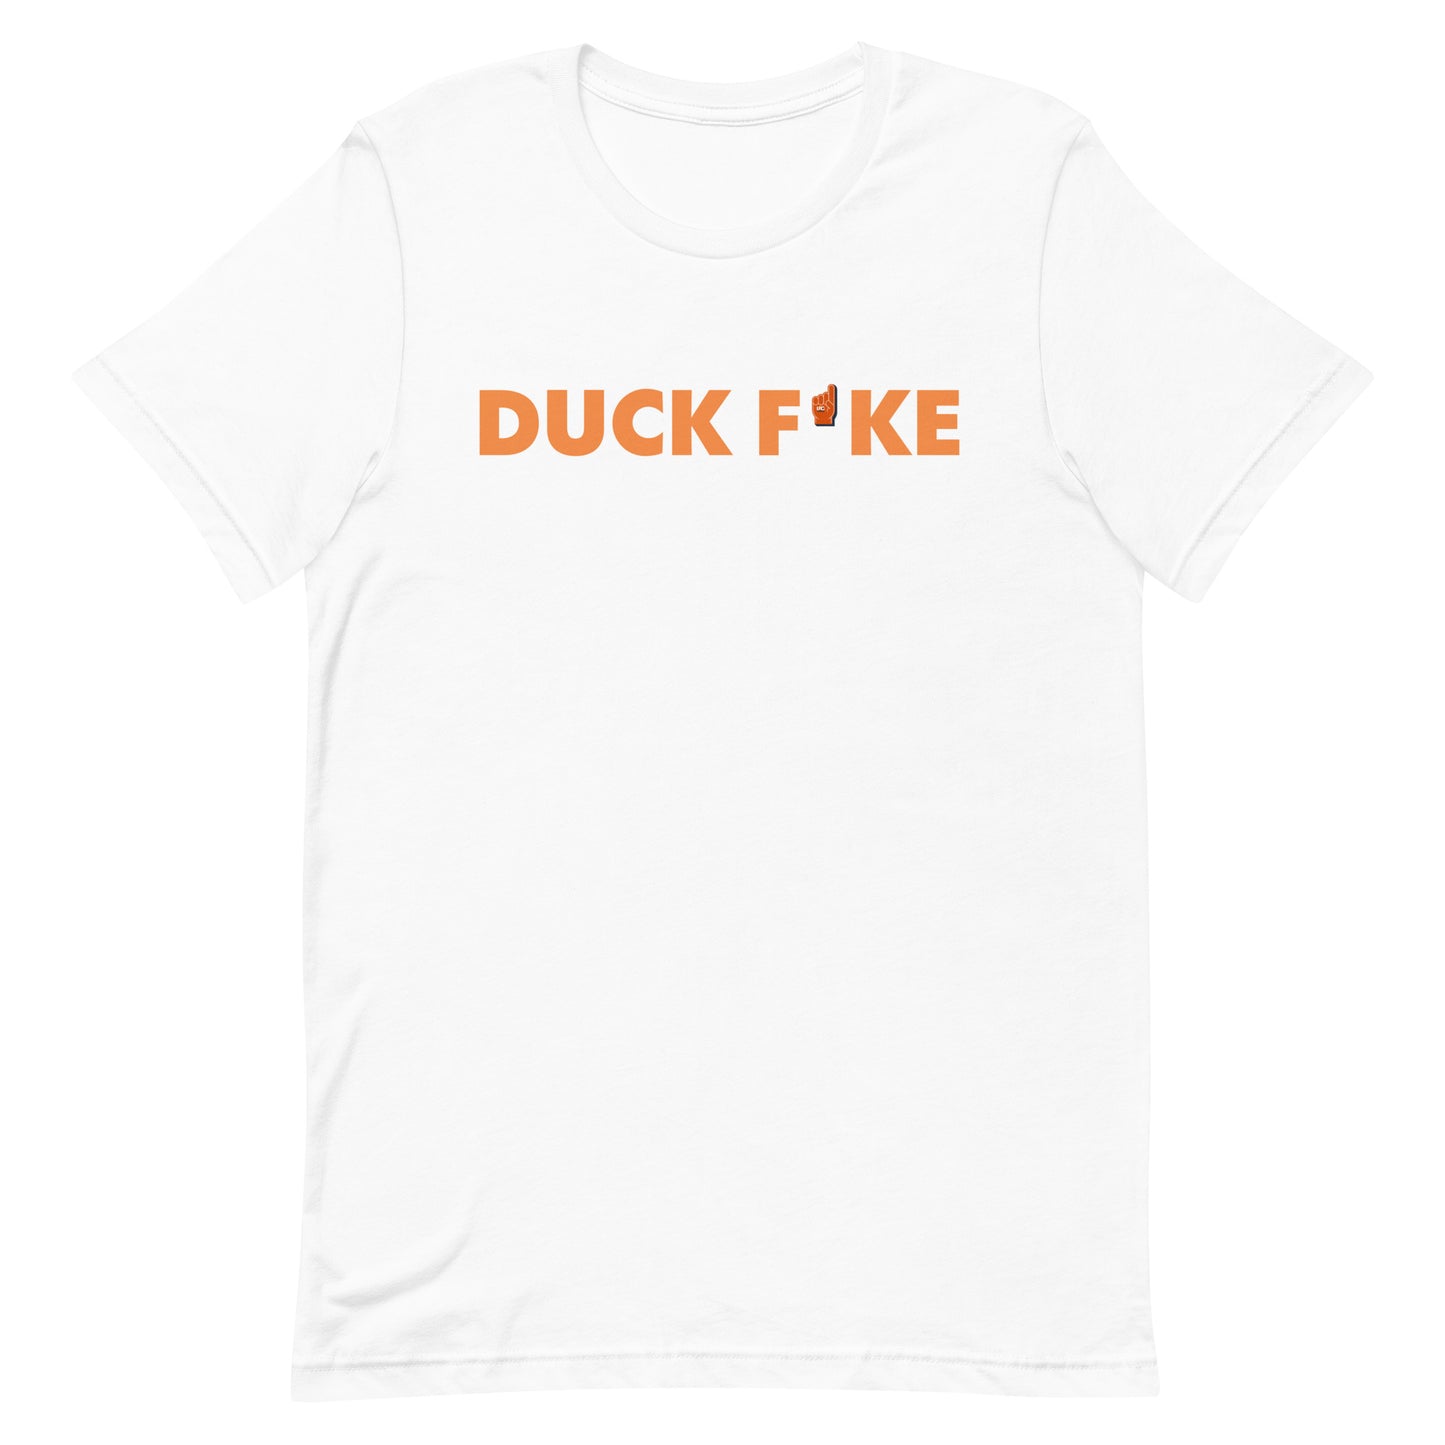 Duck F*ke T-shirt